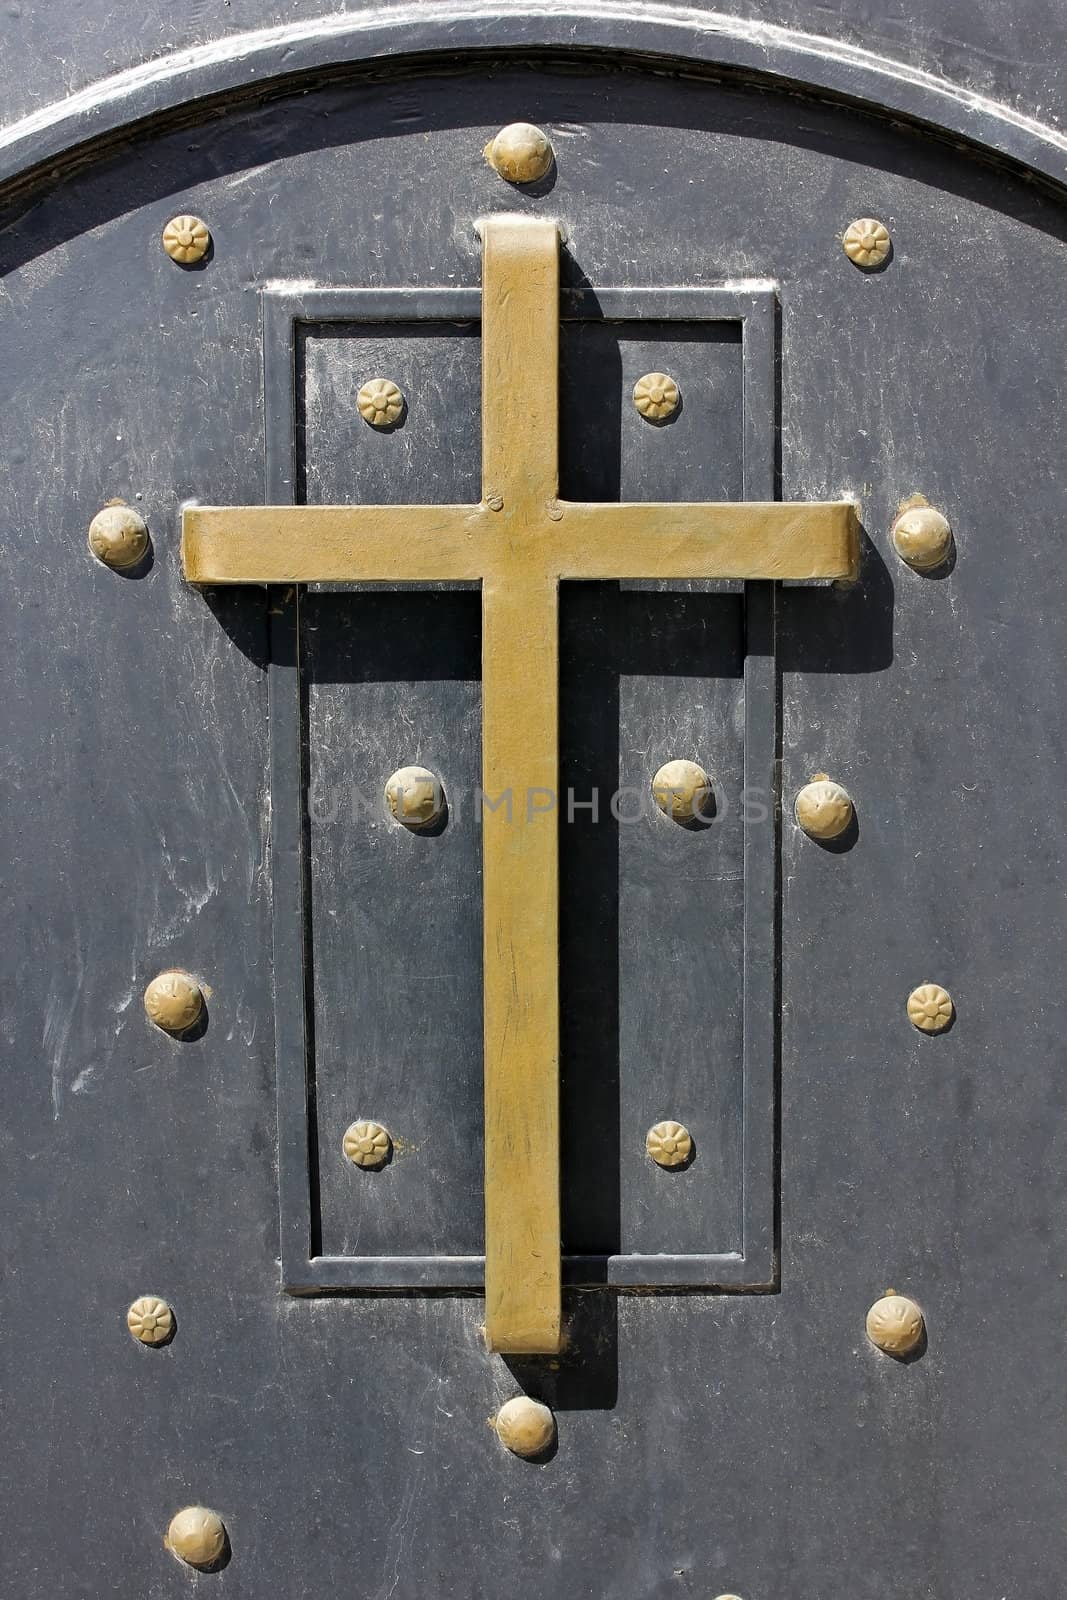 Holy Cross on the old door by irisphoto4